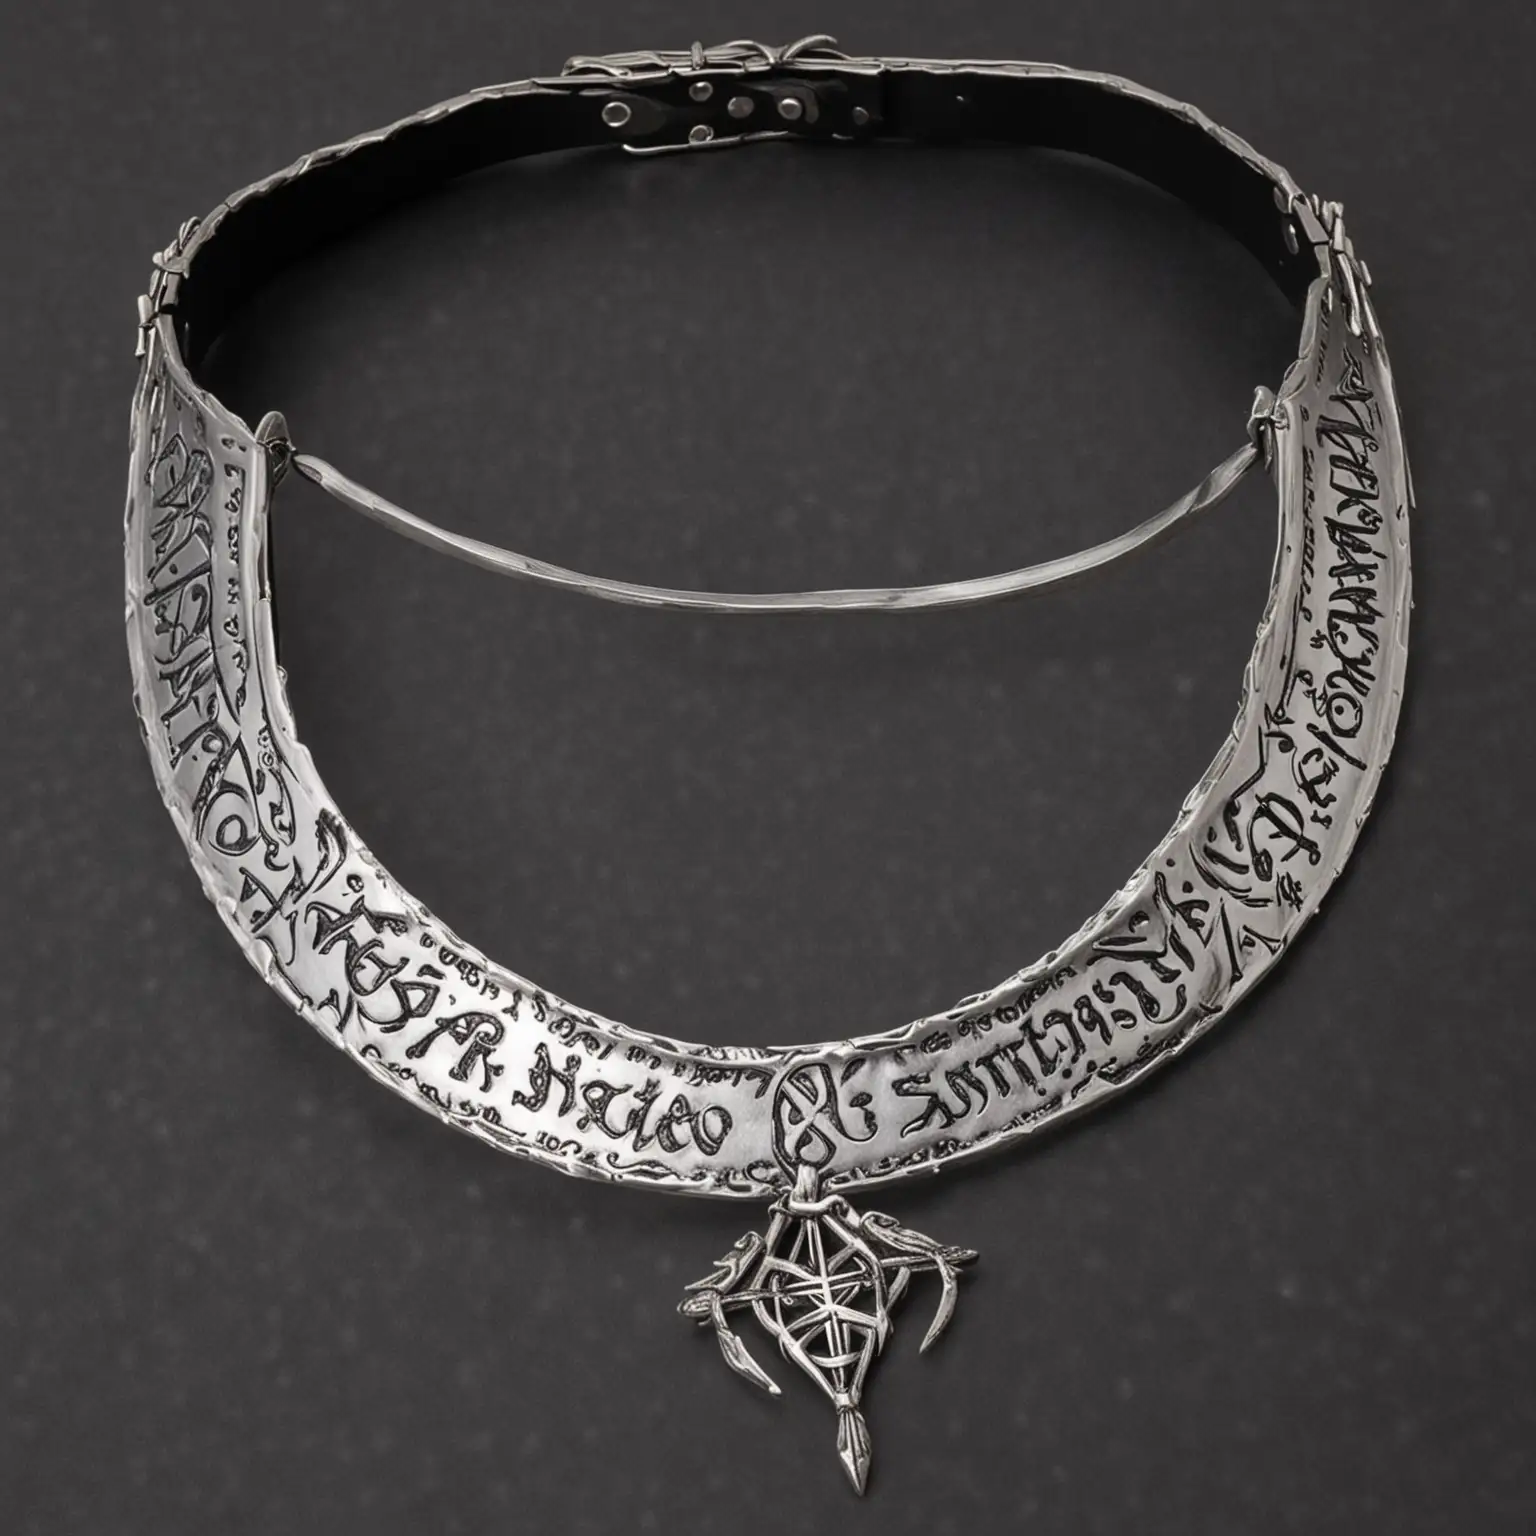 Silver collar with elvish runes